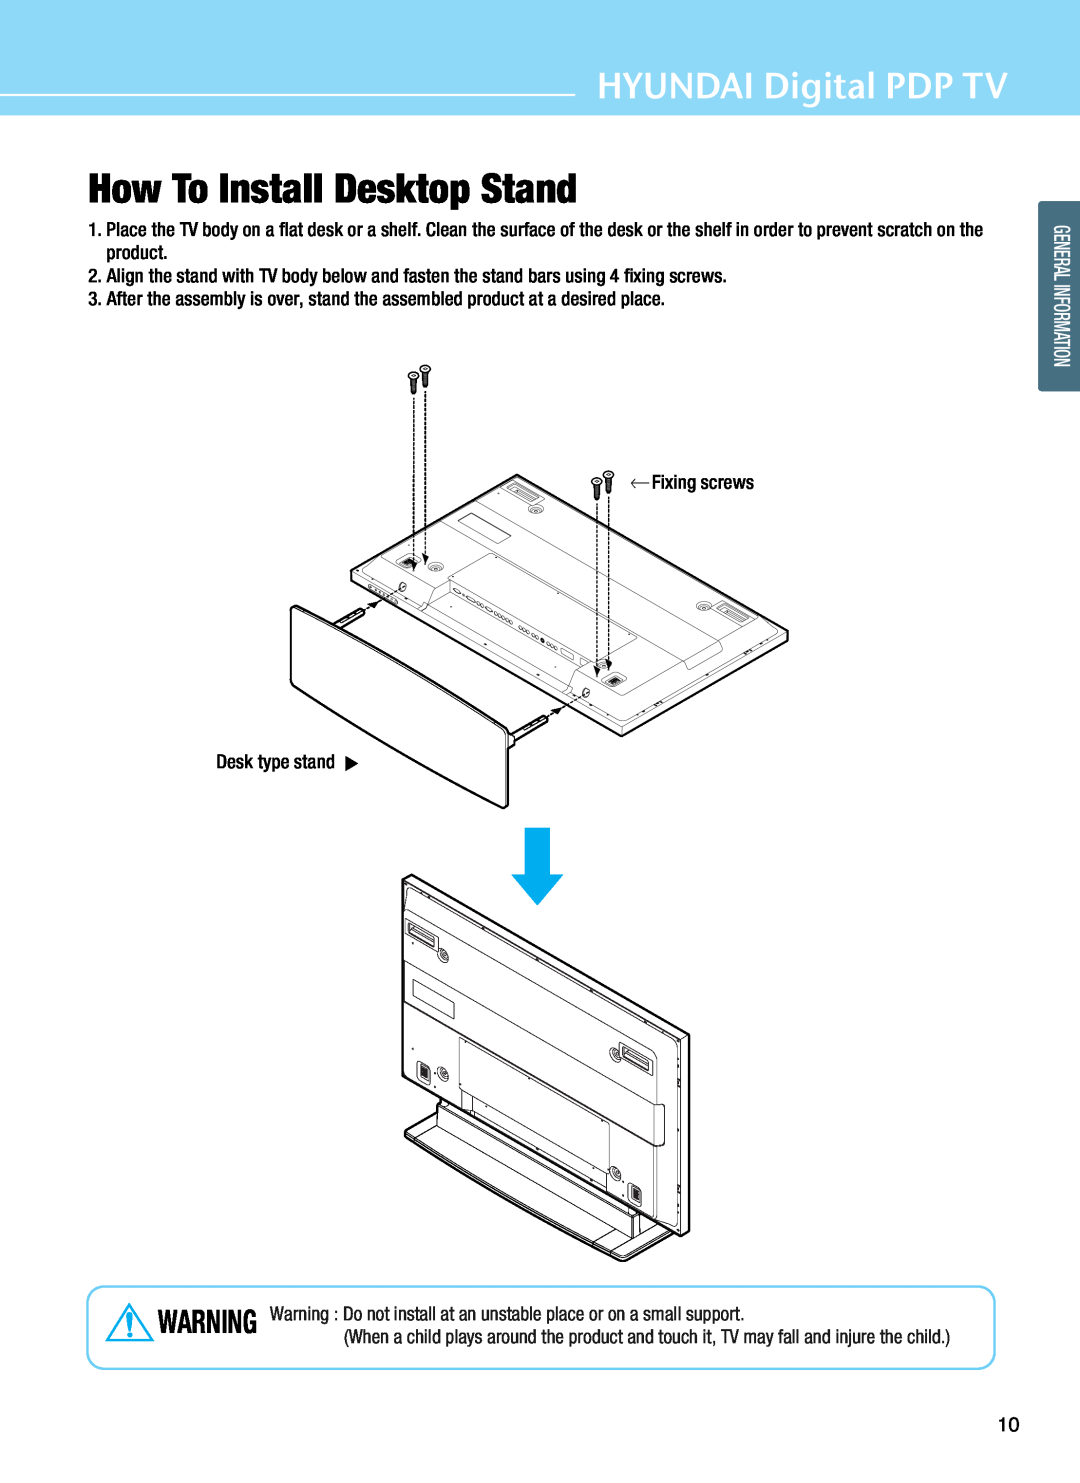 Hyundai Q421H, Q421S, Q501 manual How To Install Desktop Stand, HYUNDAI Digital PDP TV 